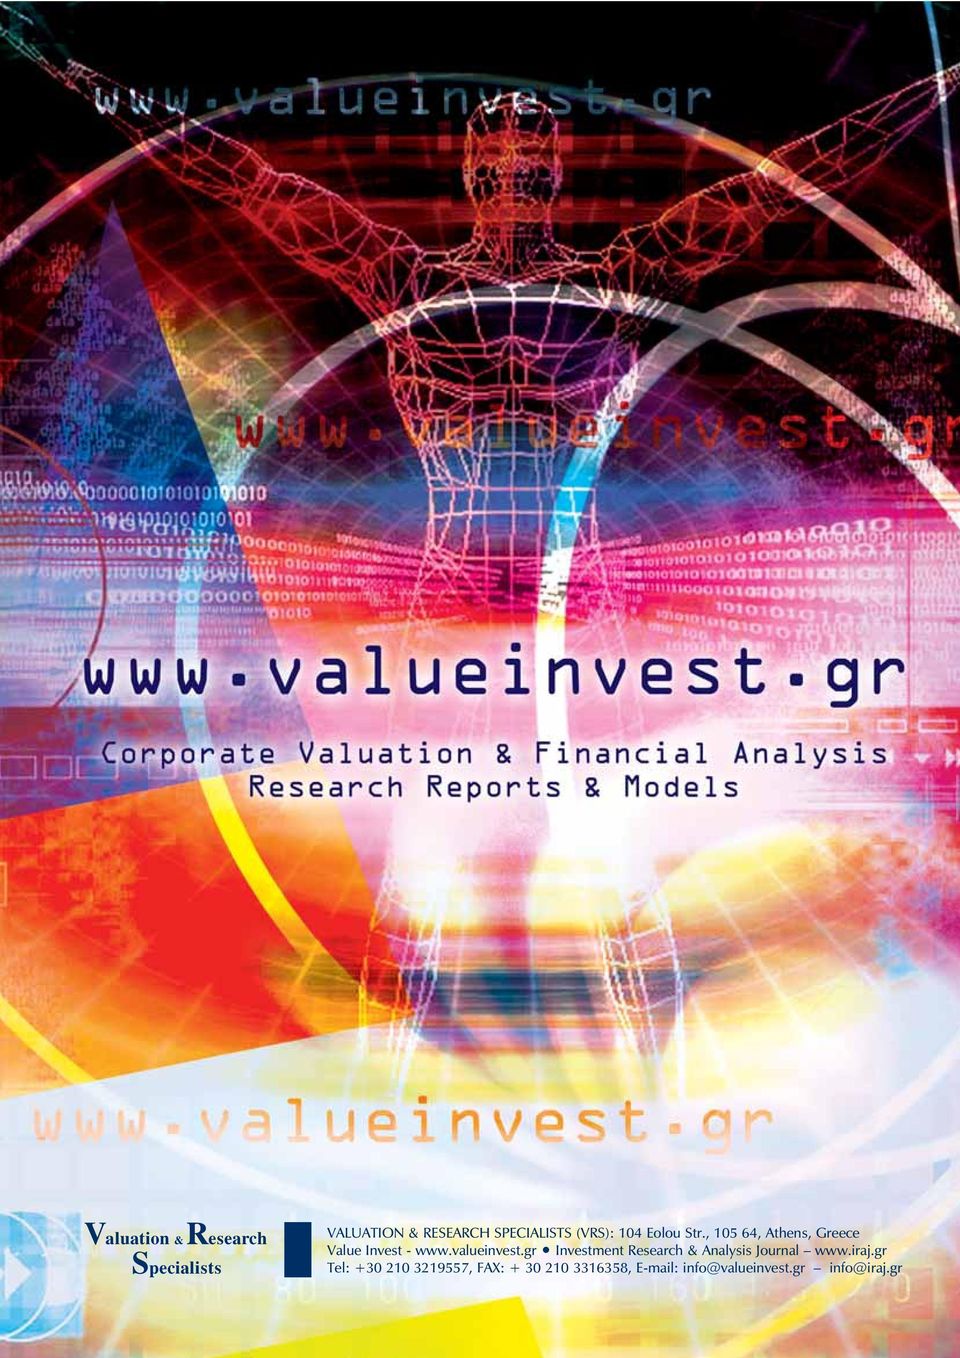 valueinvest.gr Investment Research & Analysis Journal www.iraj.